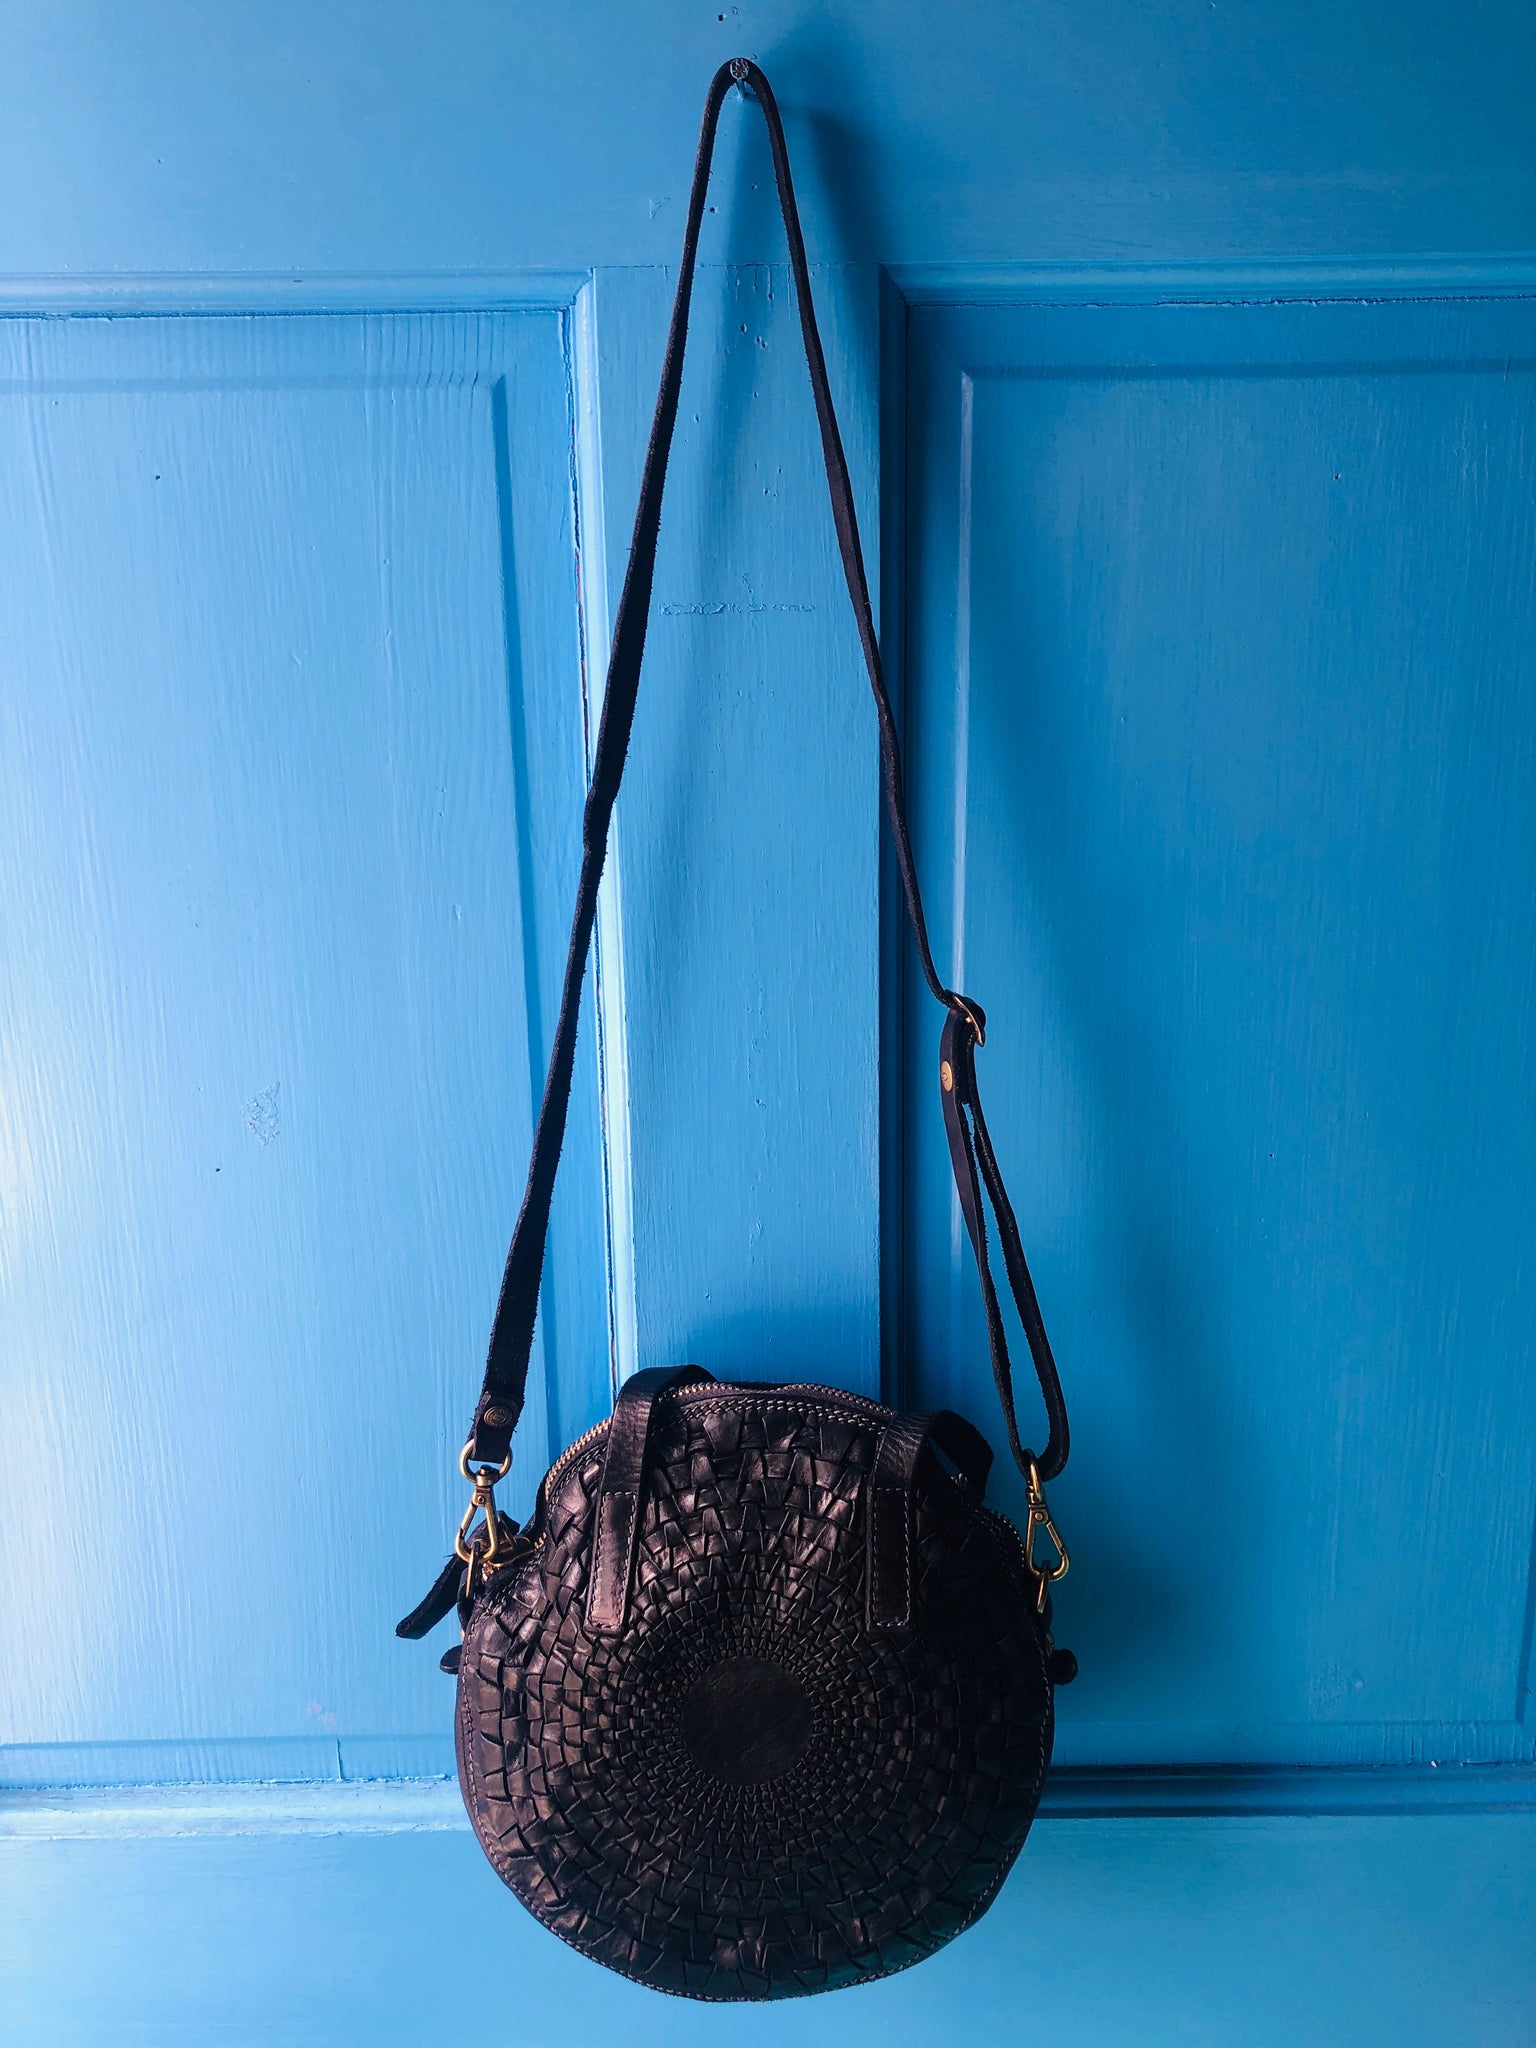 Woven Black Leather Round Bag – Pandora's Box Martha's Vineyard